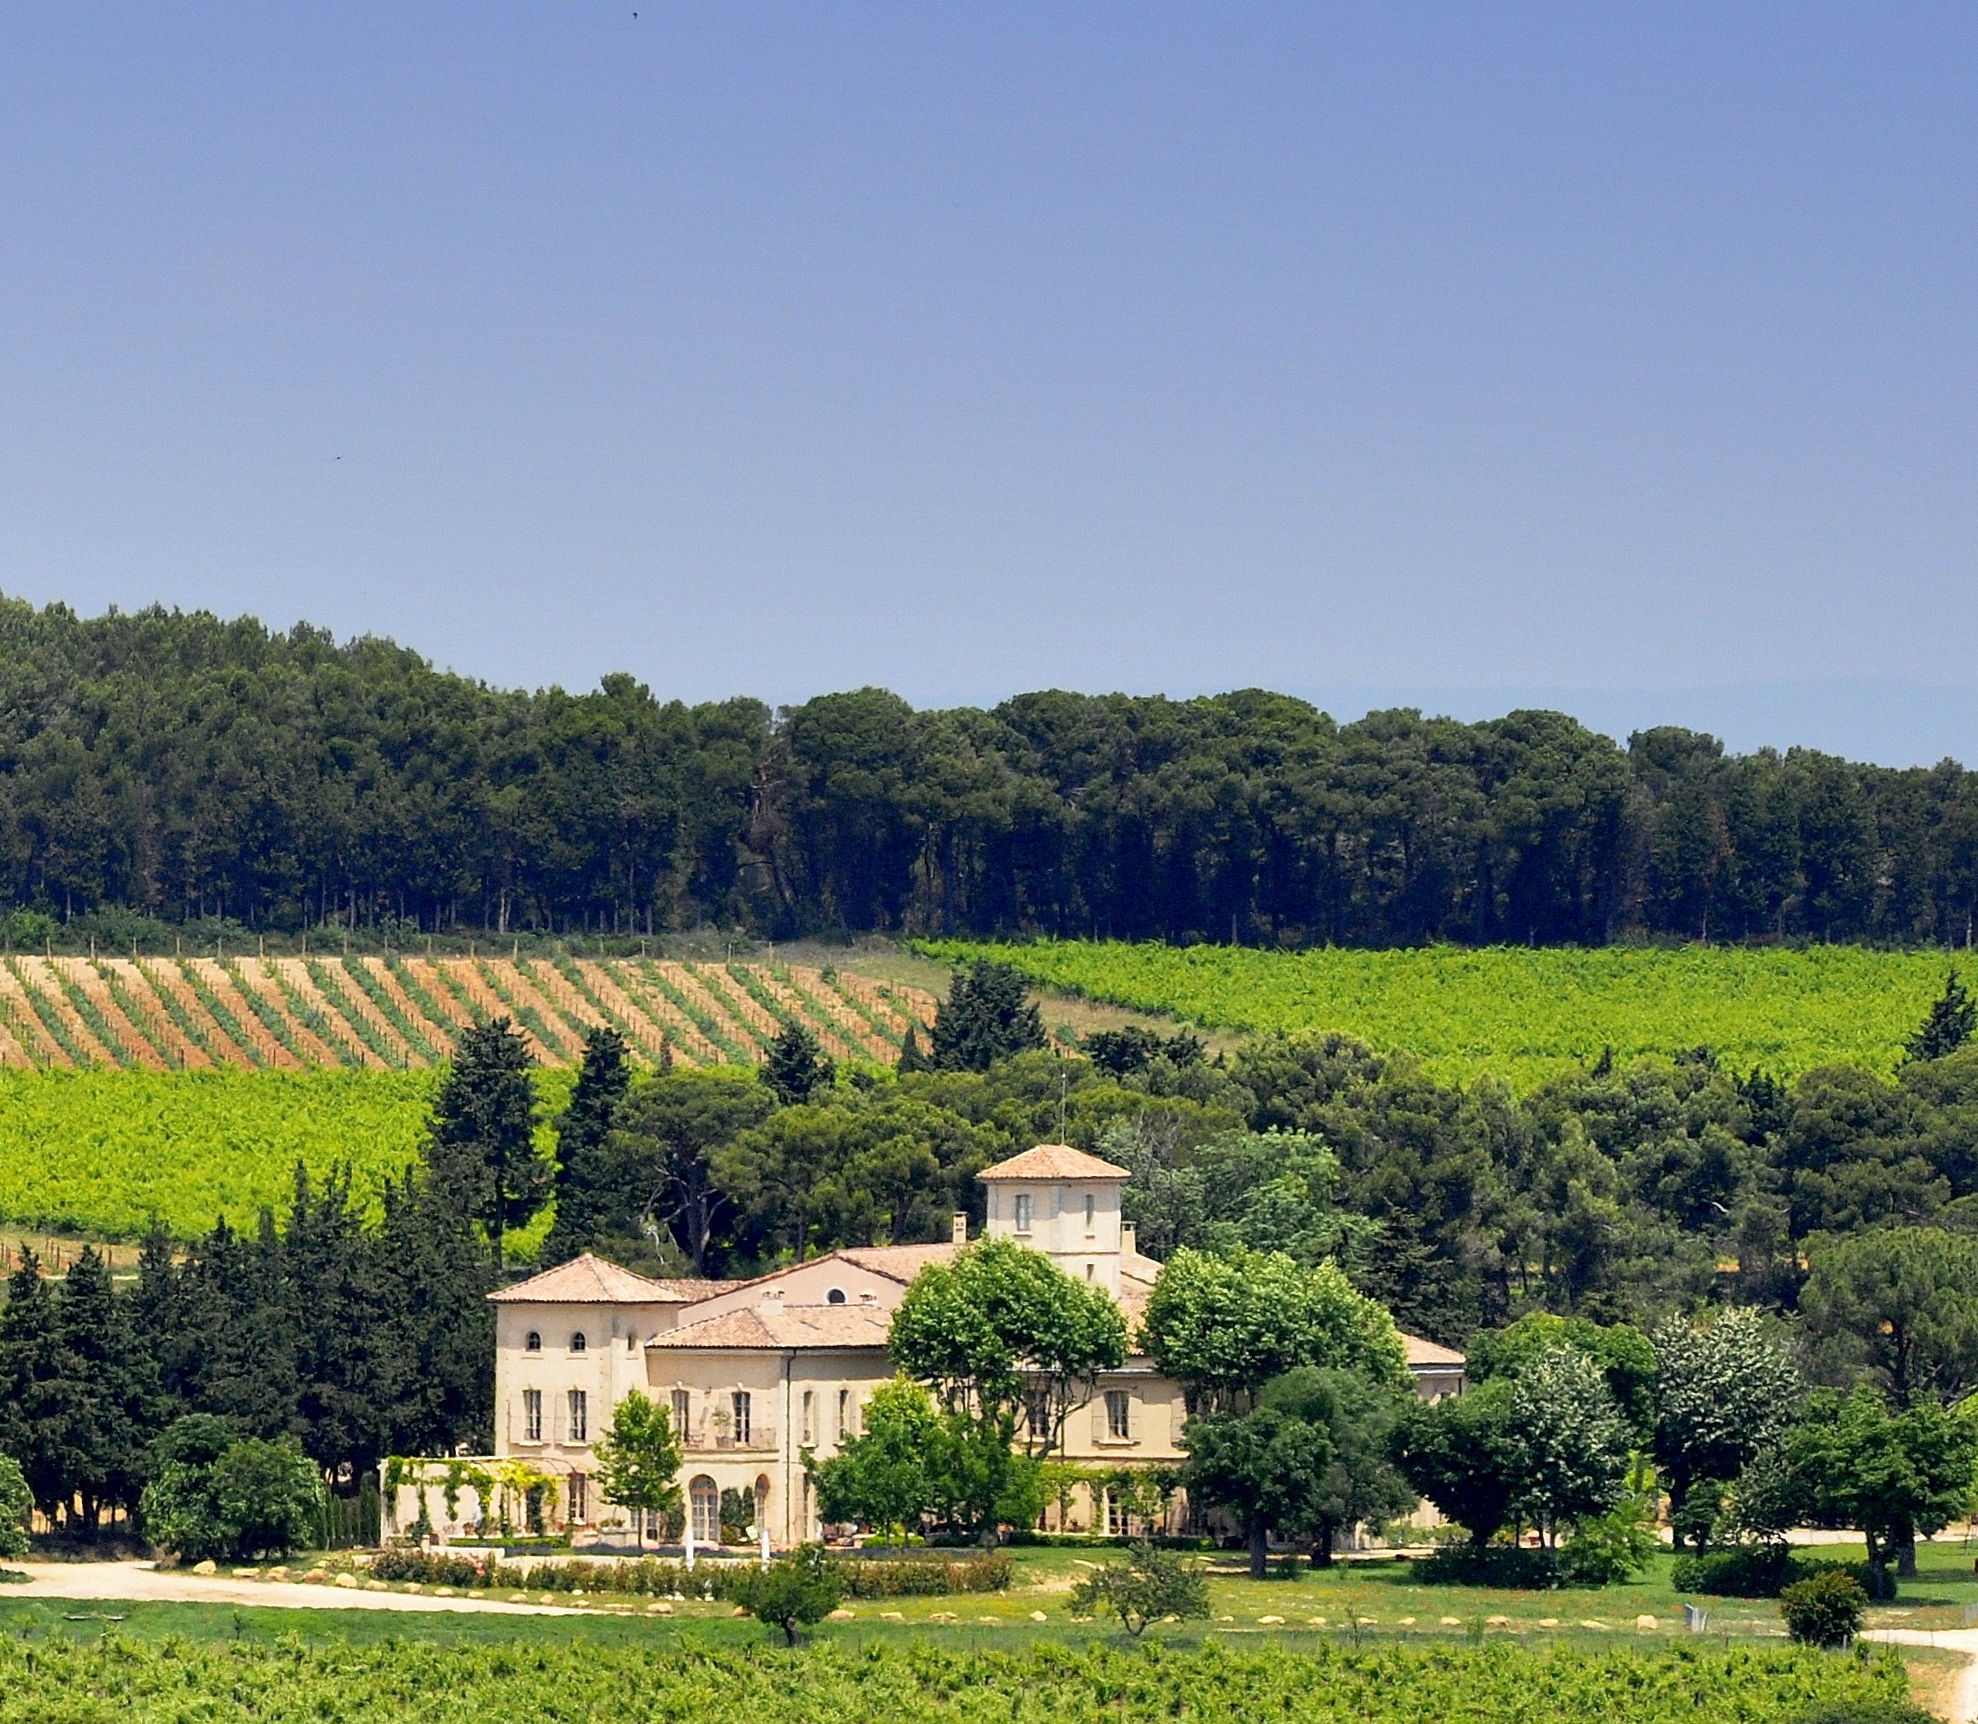 Chateau les vignes rental near avignon provence